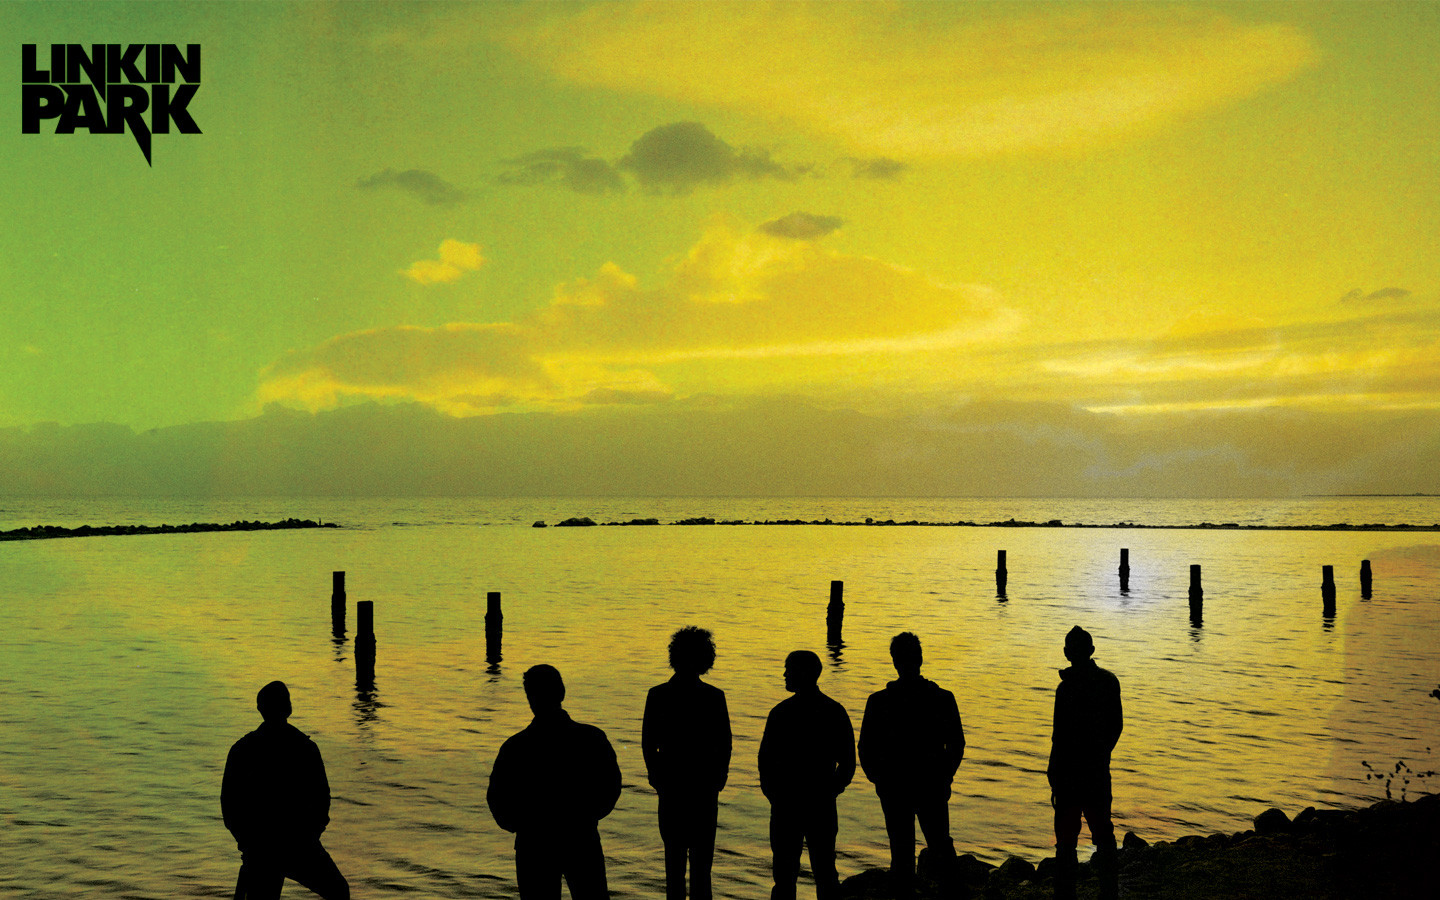 3d обои Linkin park на фоне заката на море  музыка # 59435